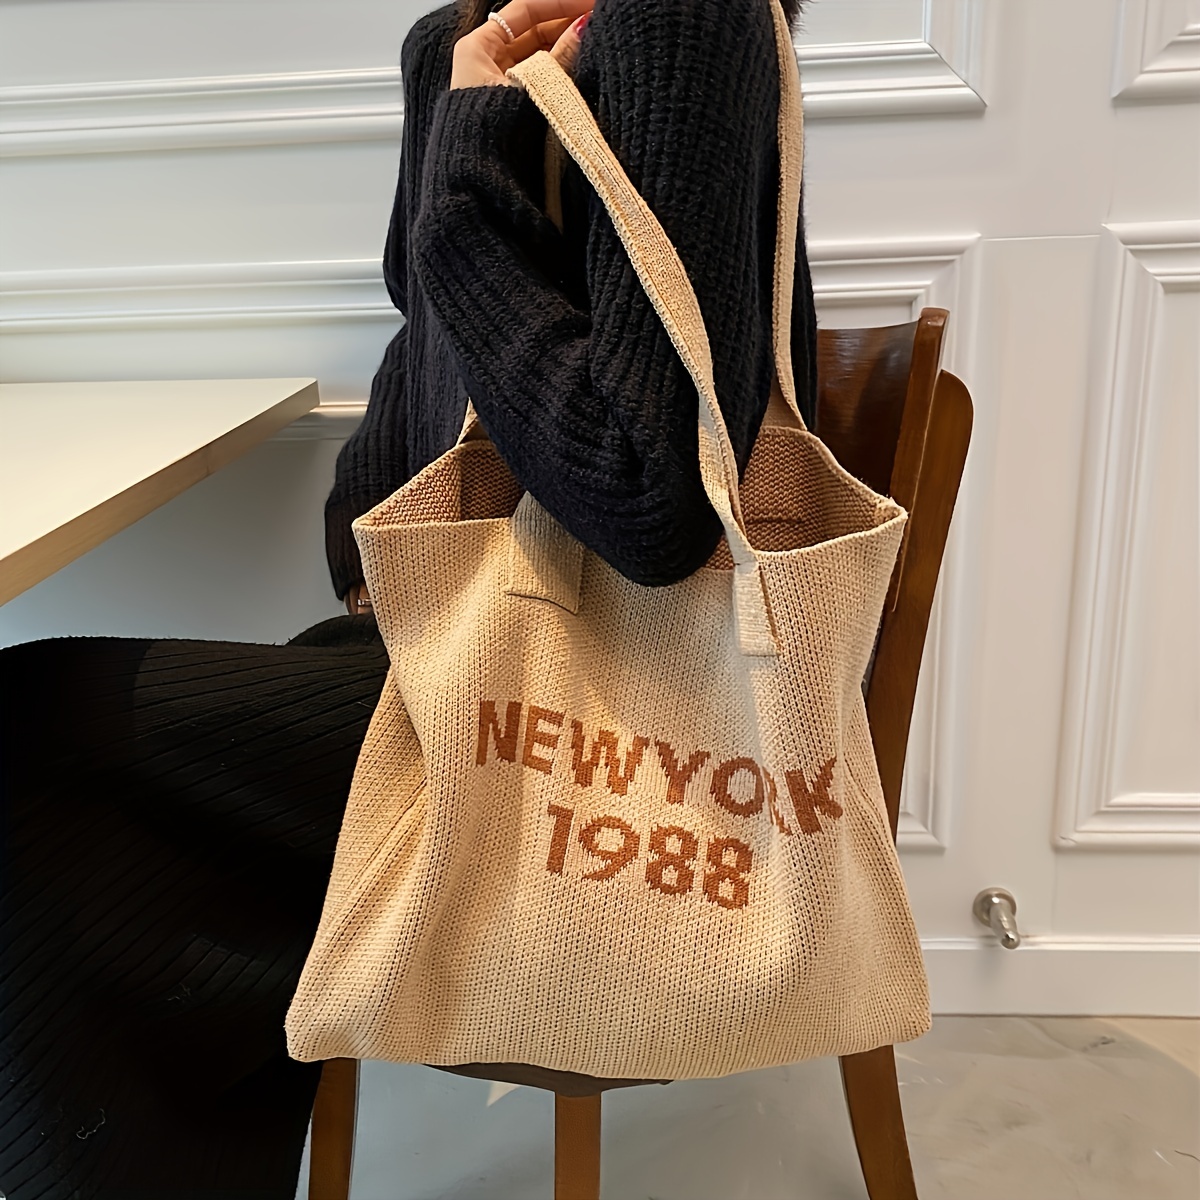 Checkered Knitted Tote Bag,Women Cute Aesthetic Shoulder Bag Large Boho Bag  for Shopping School Work Bag